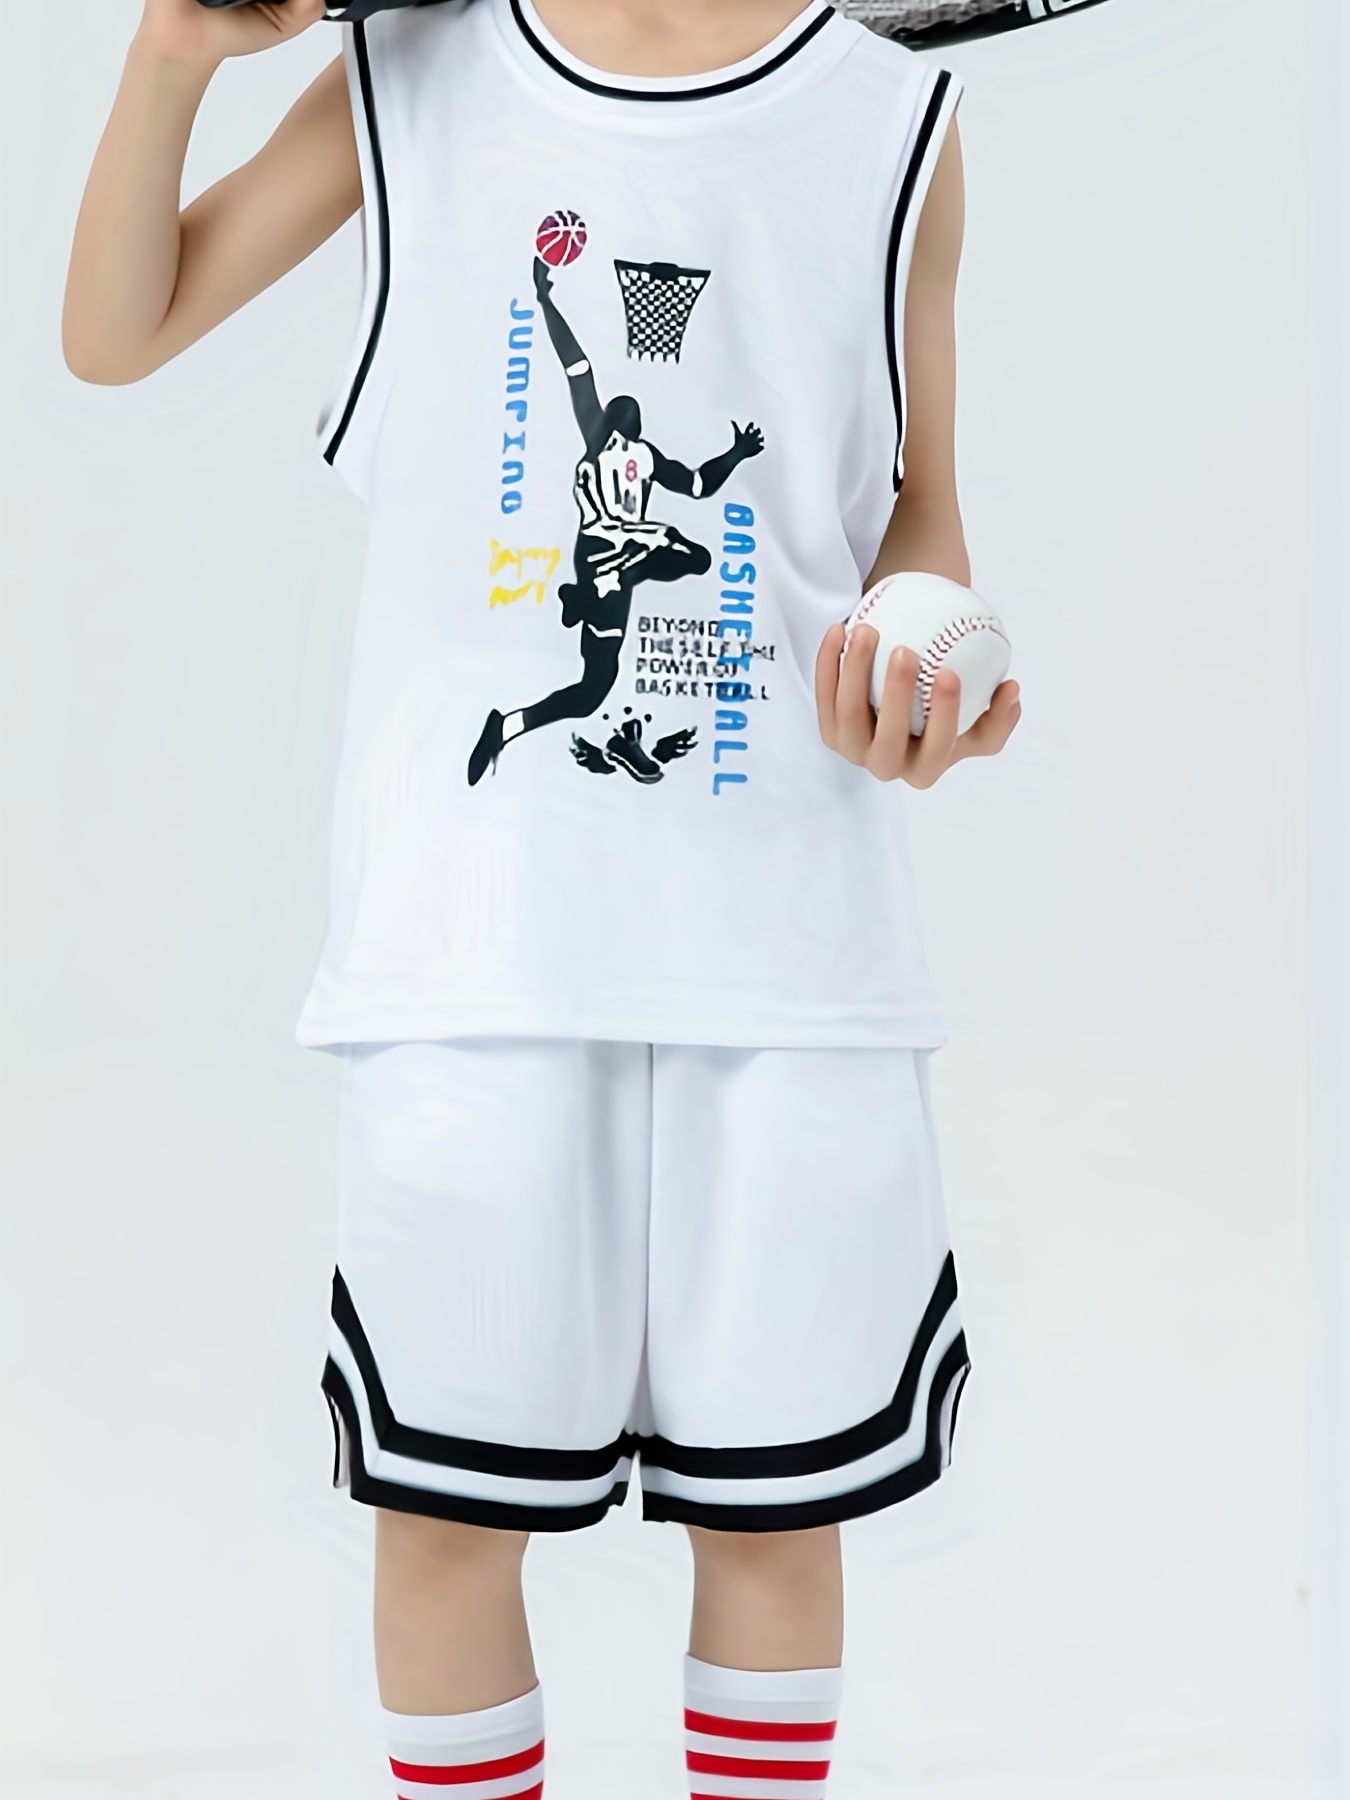 Kids Boy Girl Basketball Kit Training Suit Sport Vest Shirt Shorts